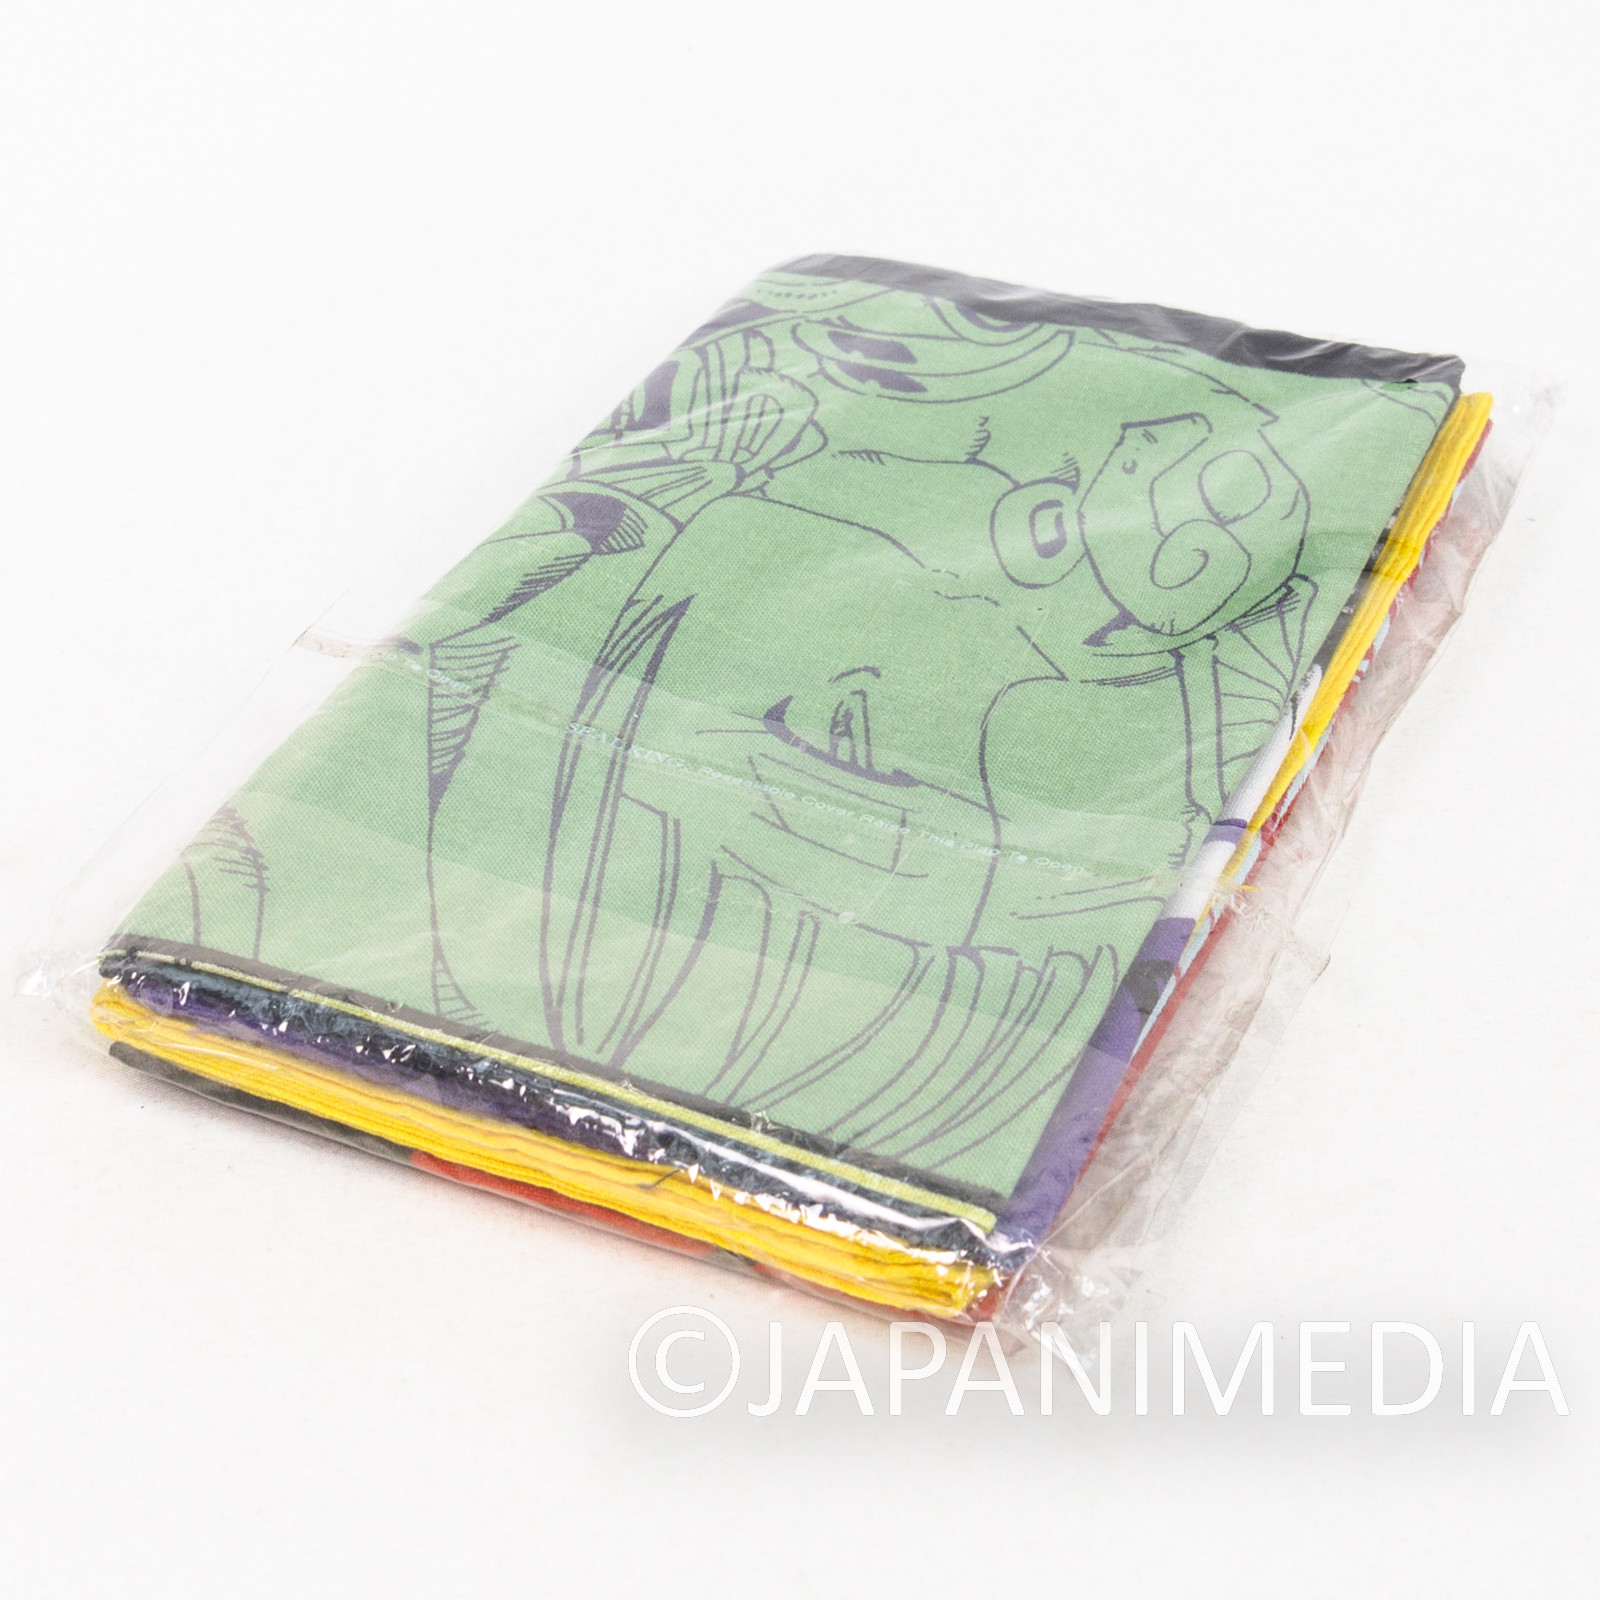 Shaman King Handkerchief 4pc Set Shonen Jump JAPAN